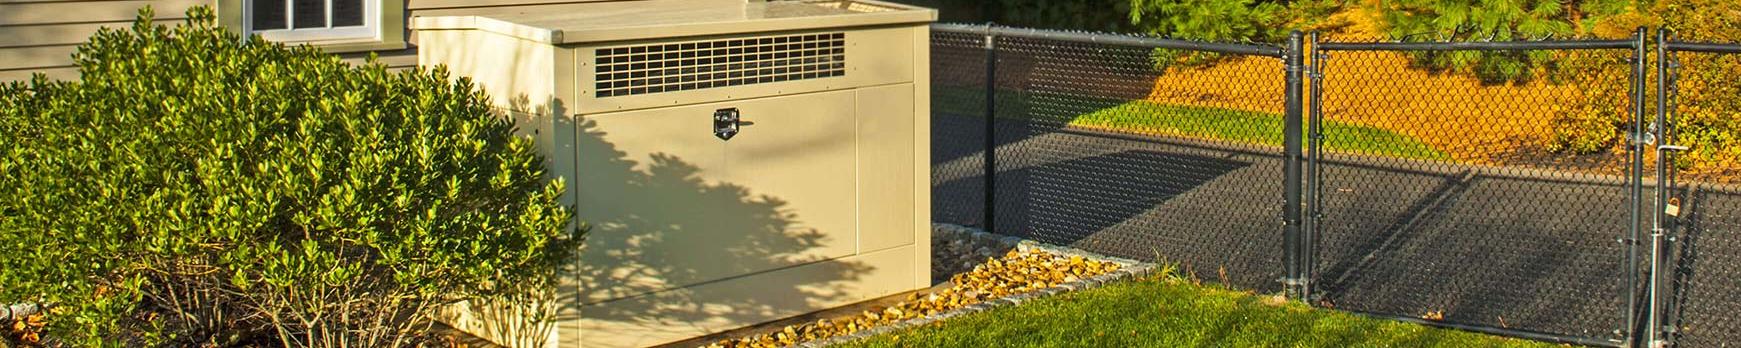 home backup generator in Richmond VA